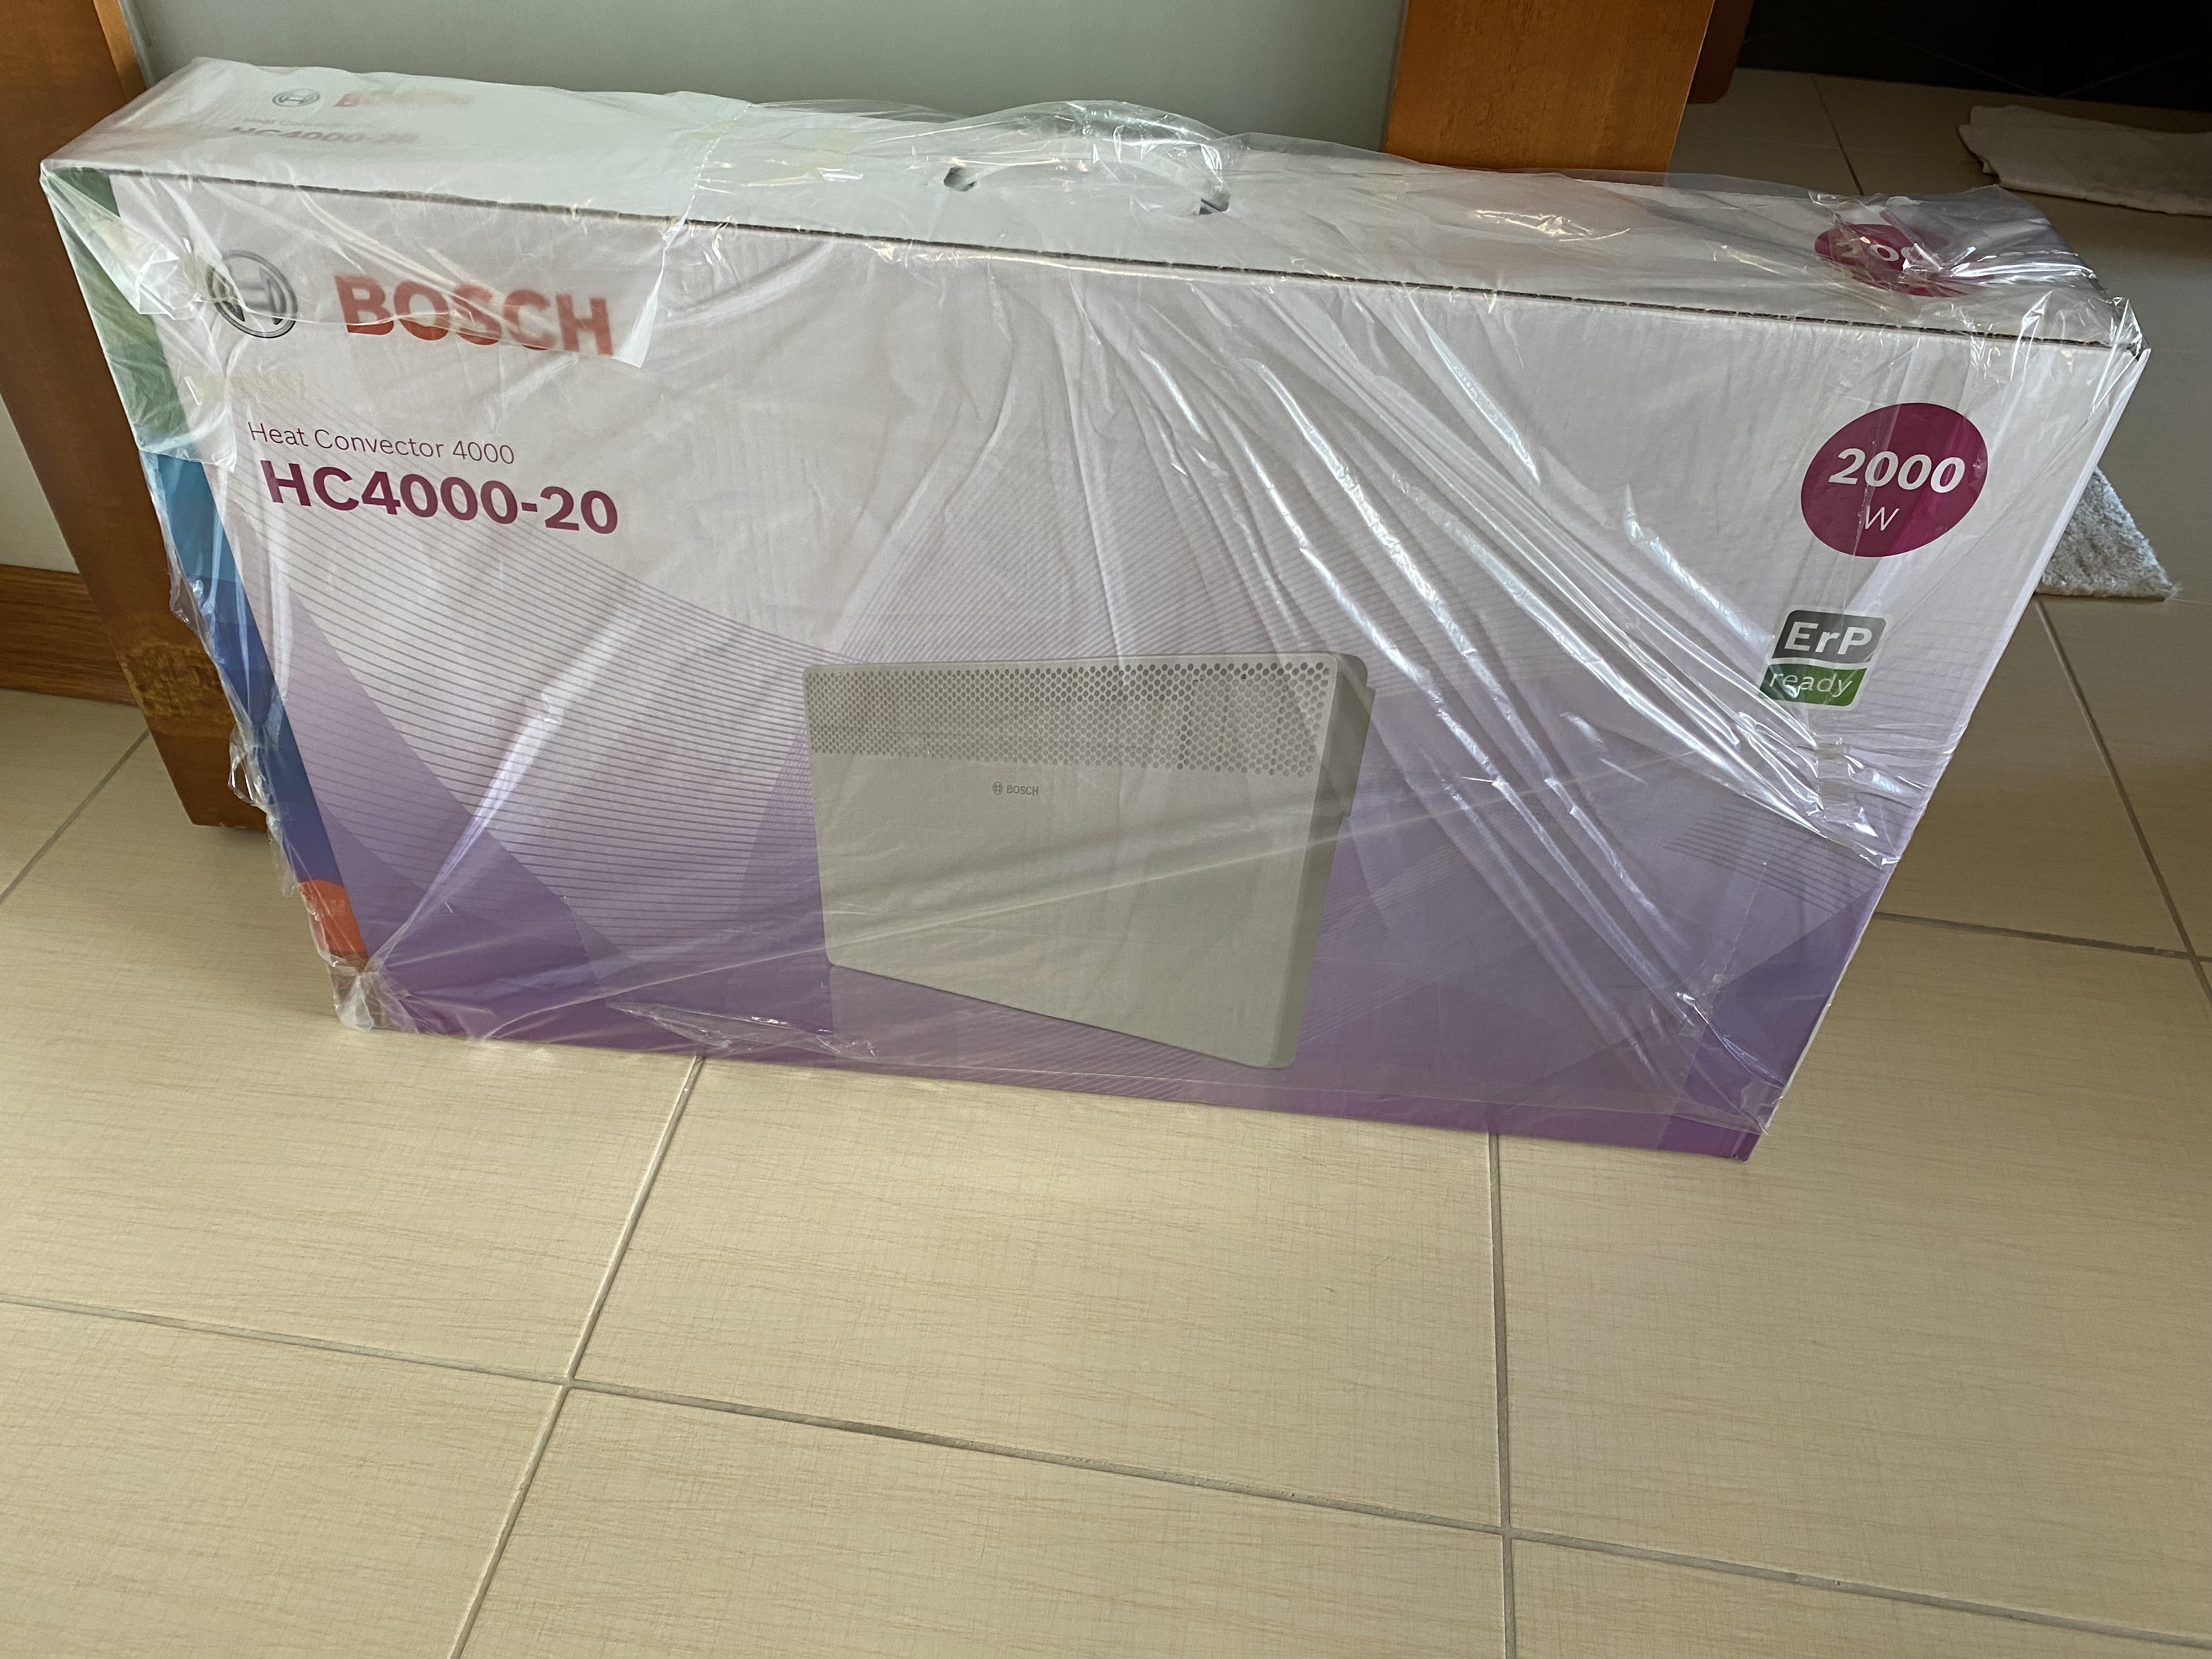 Bosch HC 4000-20 2000W Konvektör Isıtıcı | DonanımHaber Forum